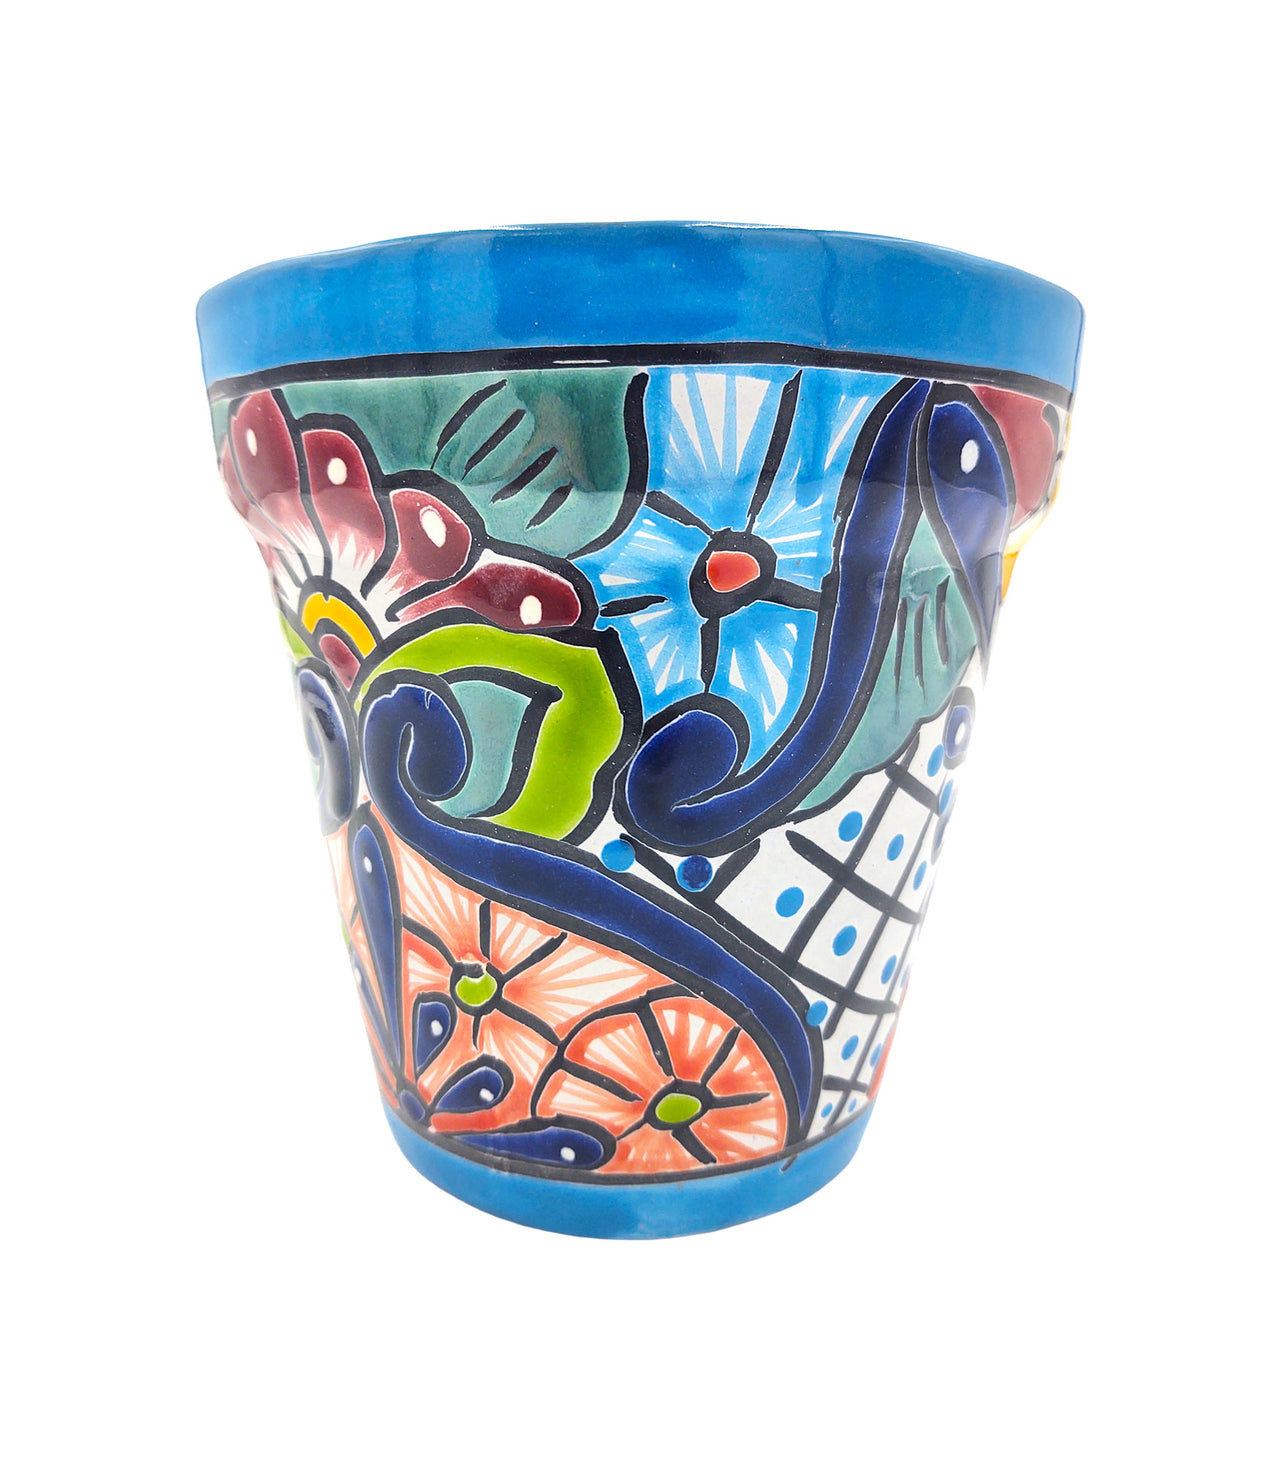 Mexican Talavera Hand Painted Planter Pot (Maceta Ranchera #20) - Traditional Ceramic Garden & Home Décor - Light Blue Trim